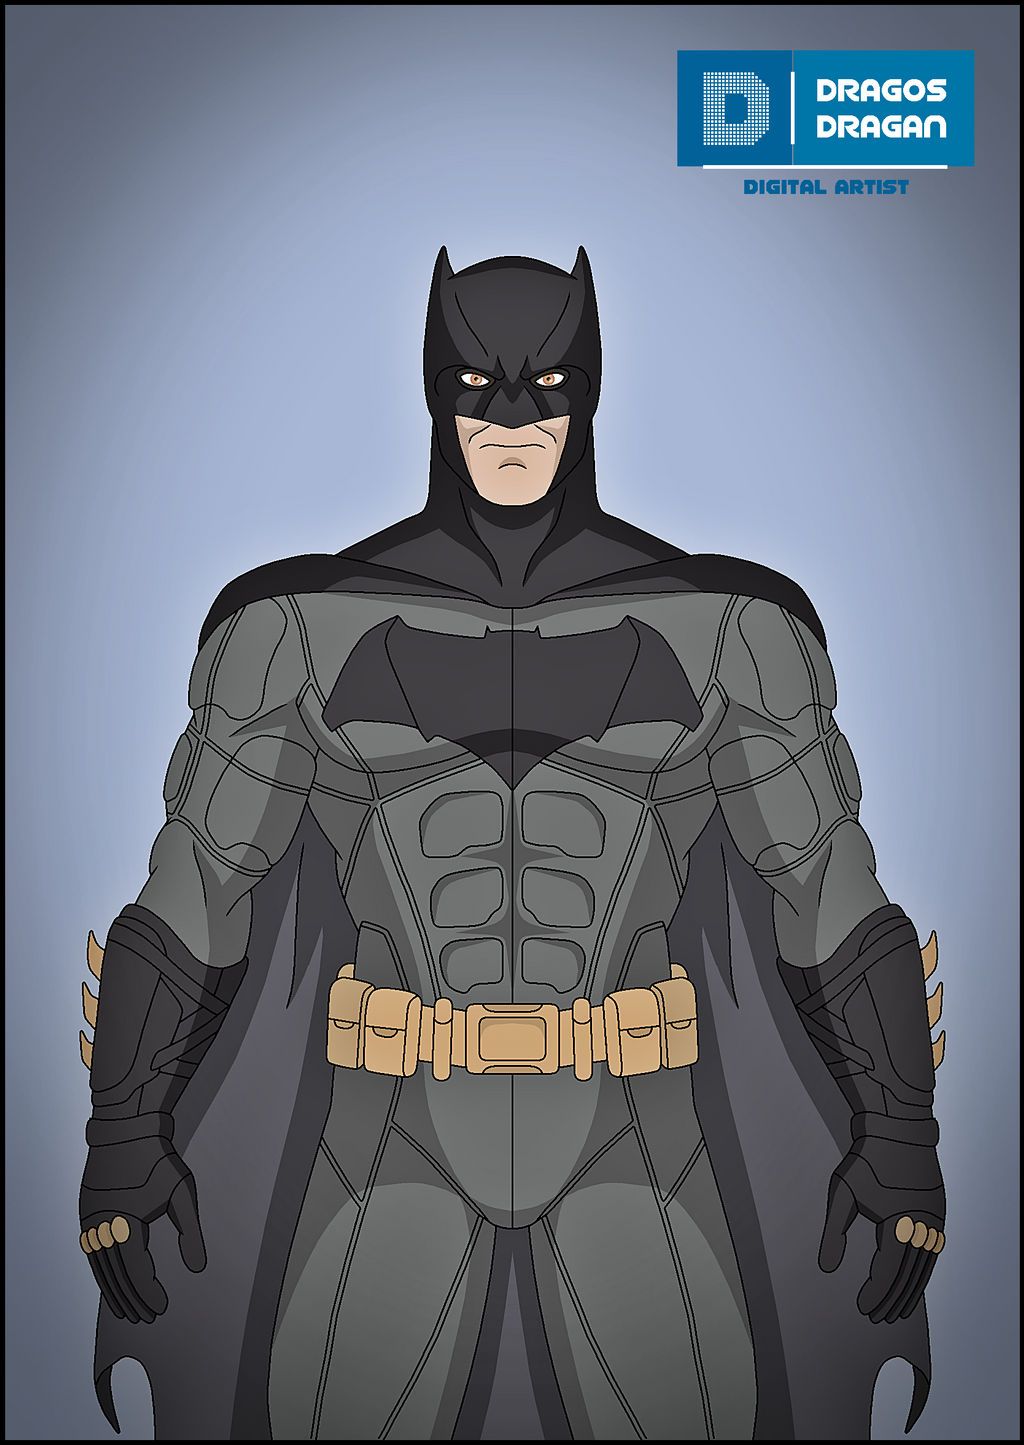 Batman (Justice League - 2017) by DraganD on DeviantArt